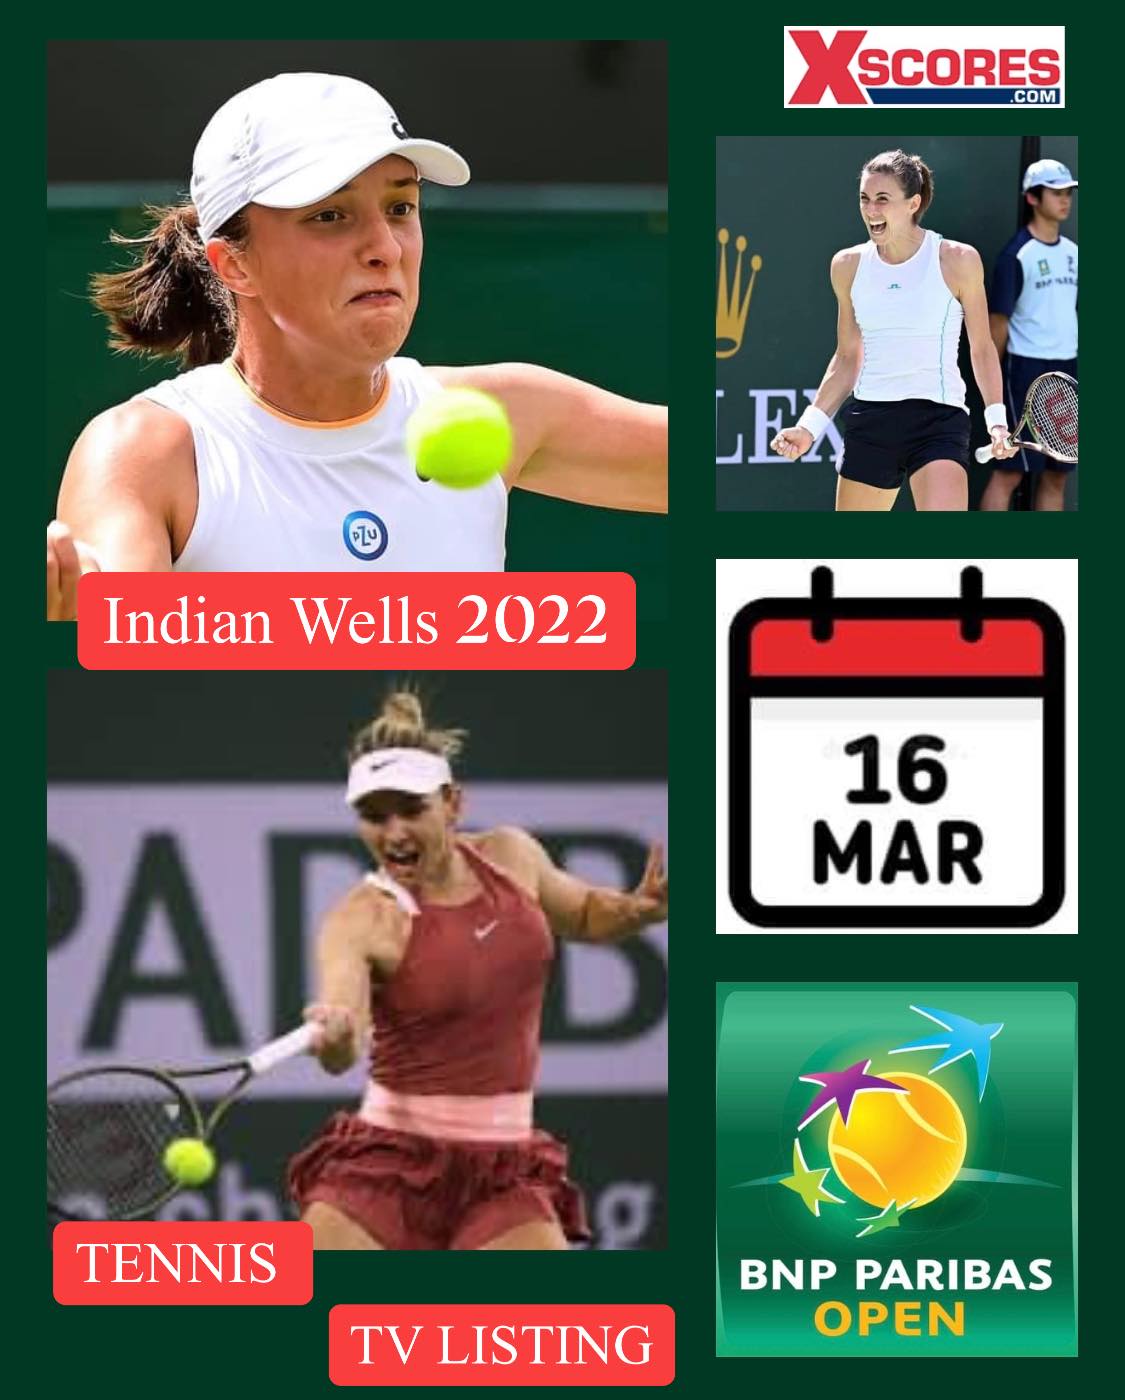 🎾🎾Tennis- WTA Tour 1000 – BNP PARIBAS OPEN Indian Wells, California, 🇺🇸United States🎾🎾 – Wednesday, 16th March 2022. 🎾WOMENS SINGLES QUARTERFINALS - Xscores